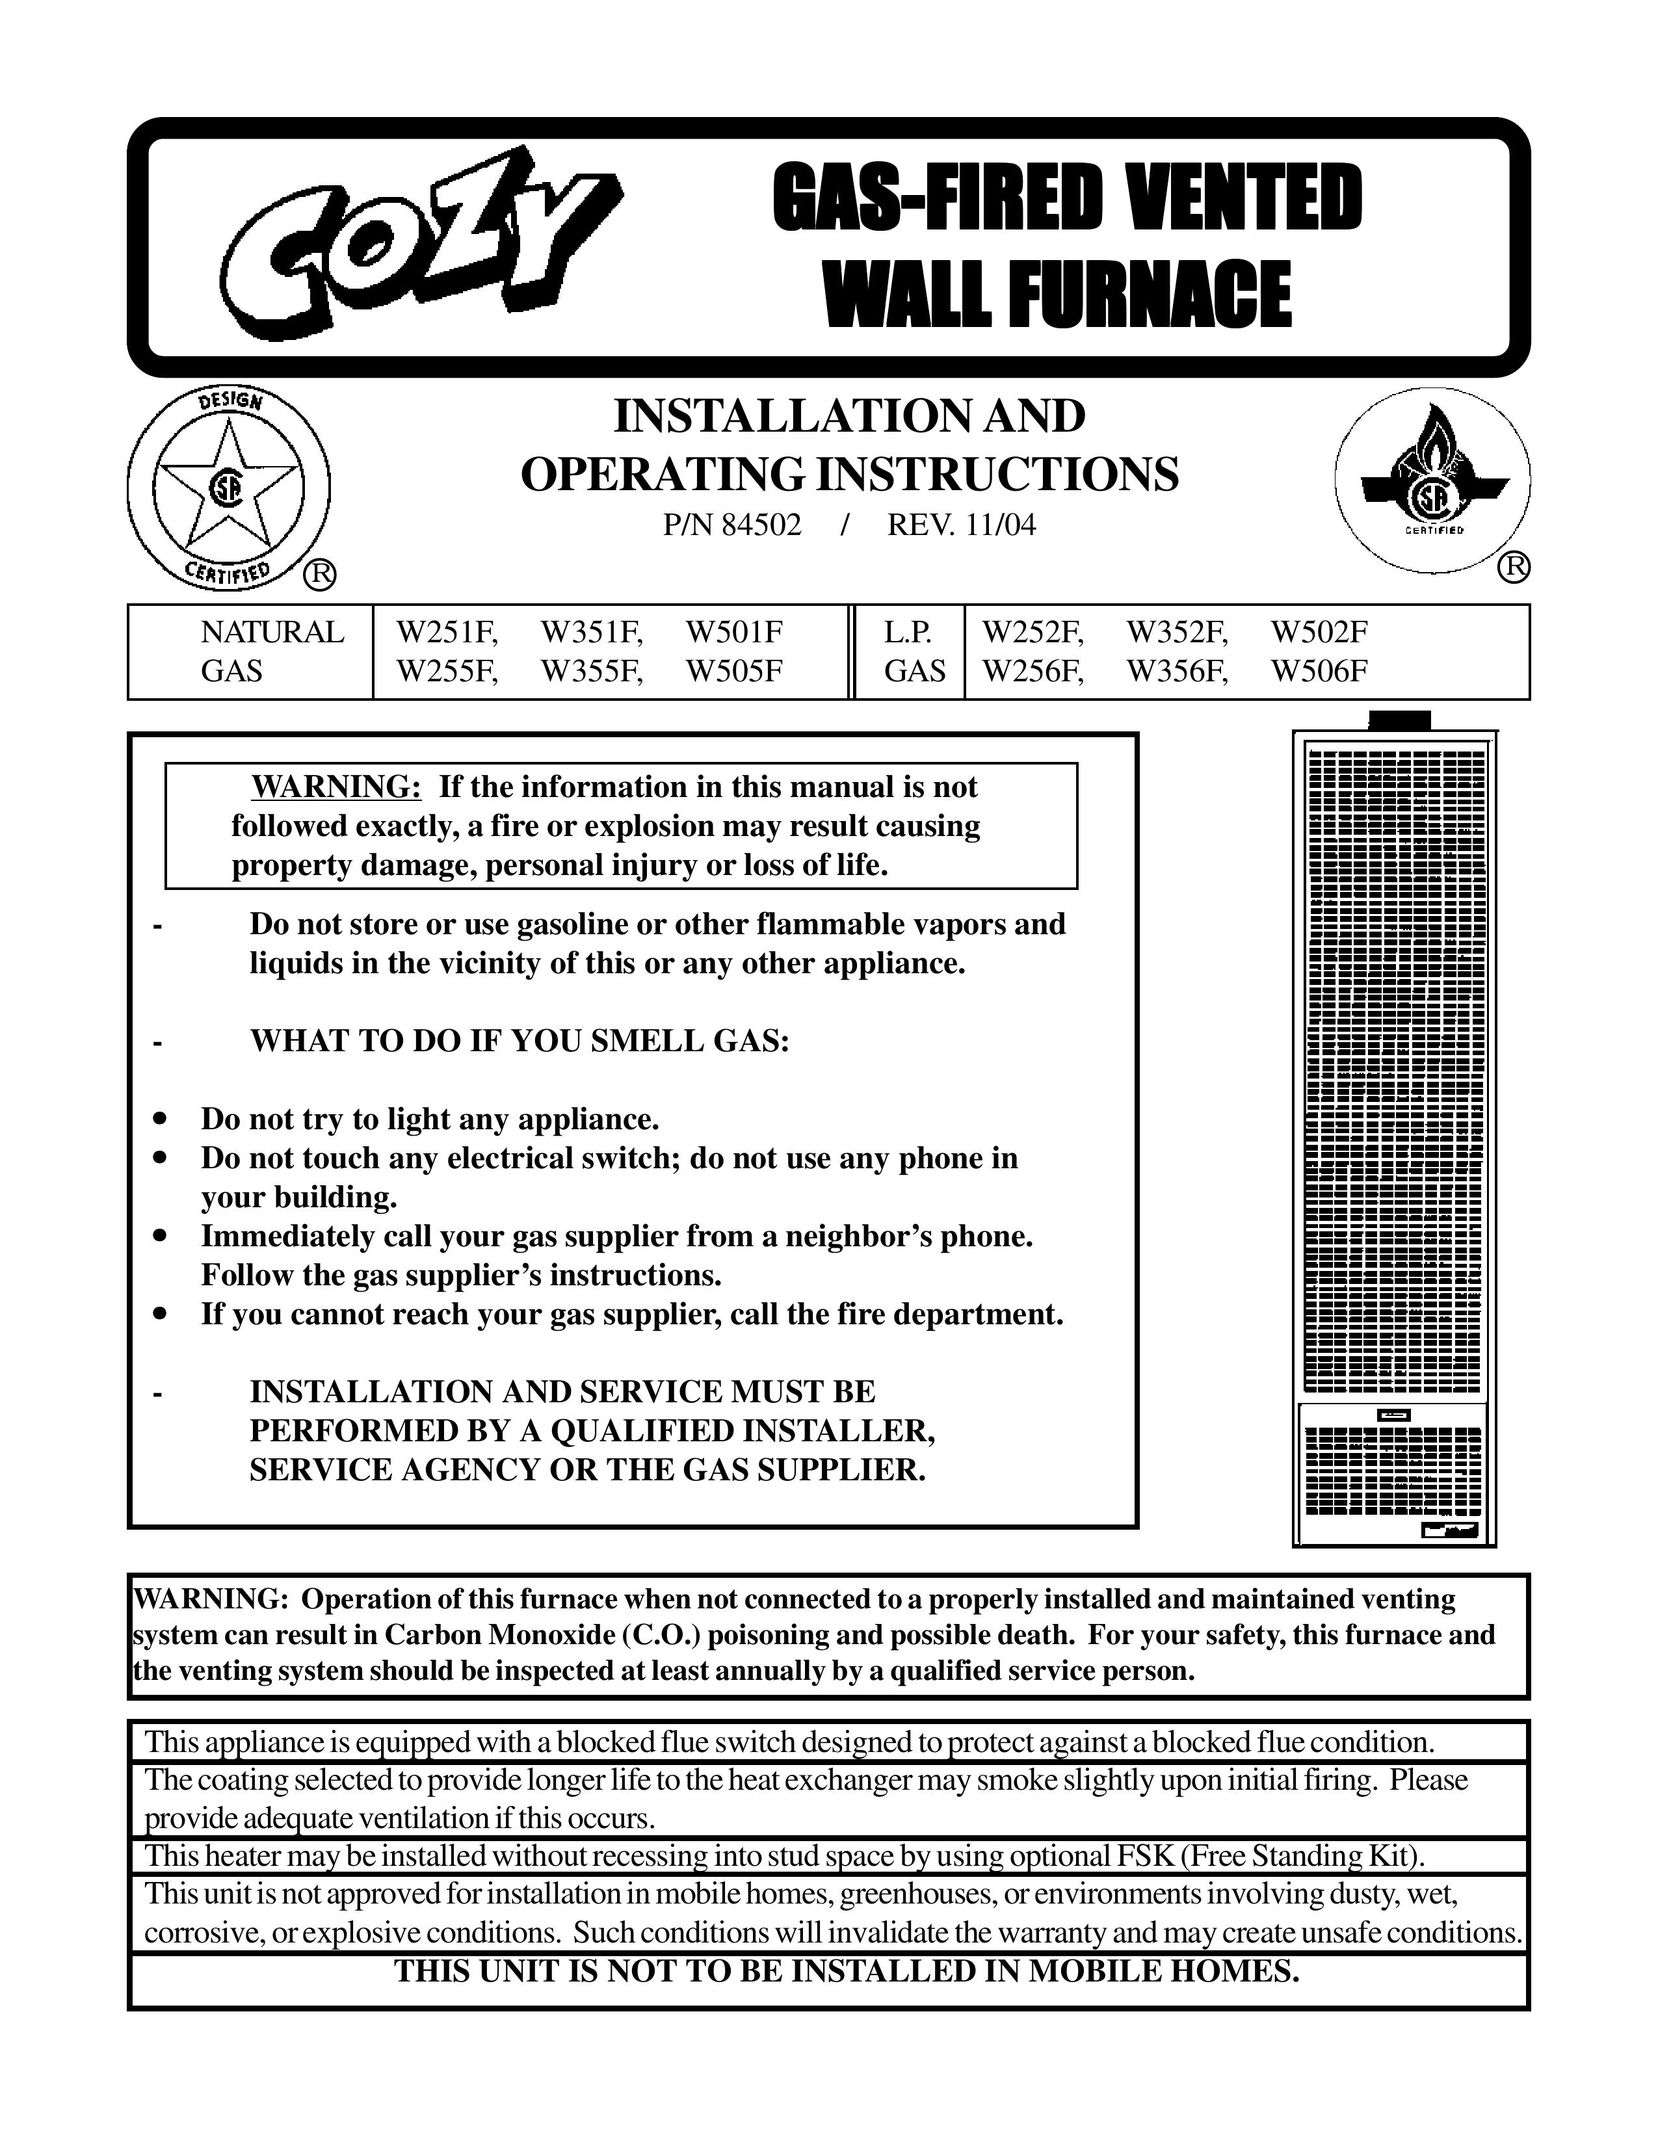 Louisville Tin and Stove W355F Furnace User Manual